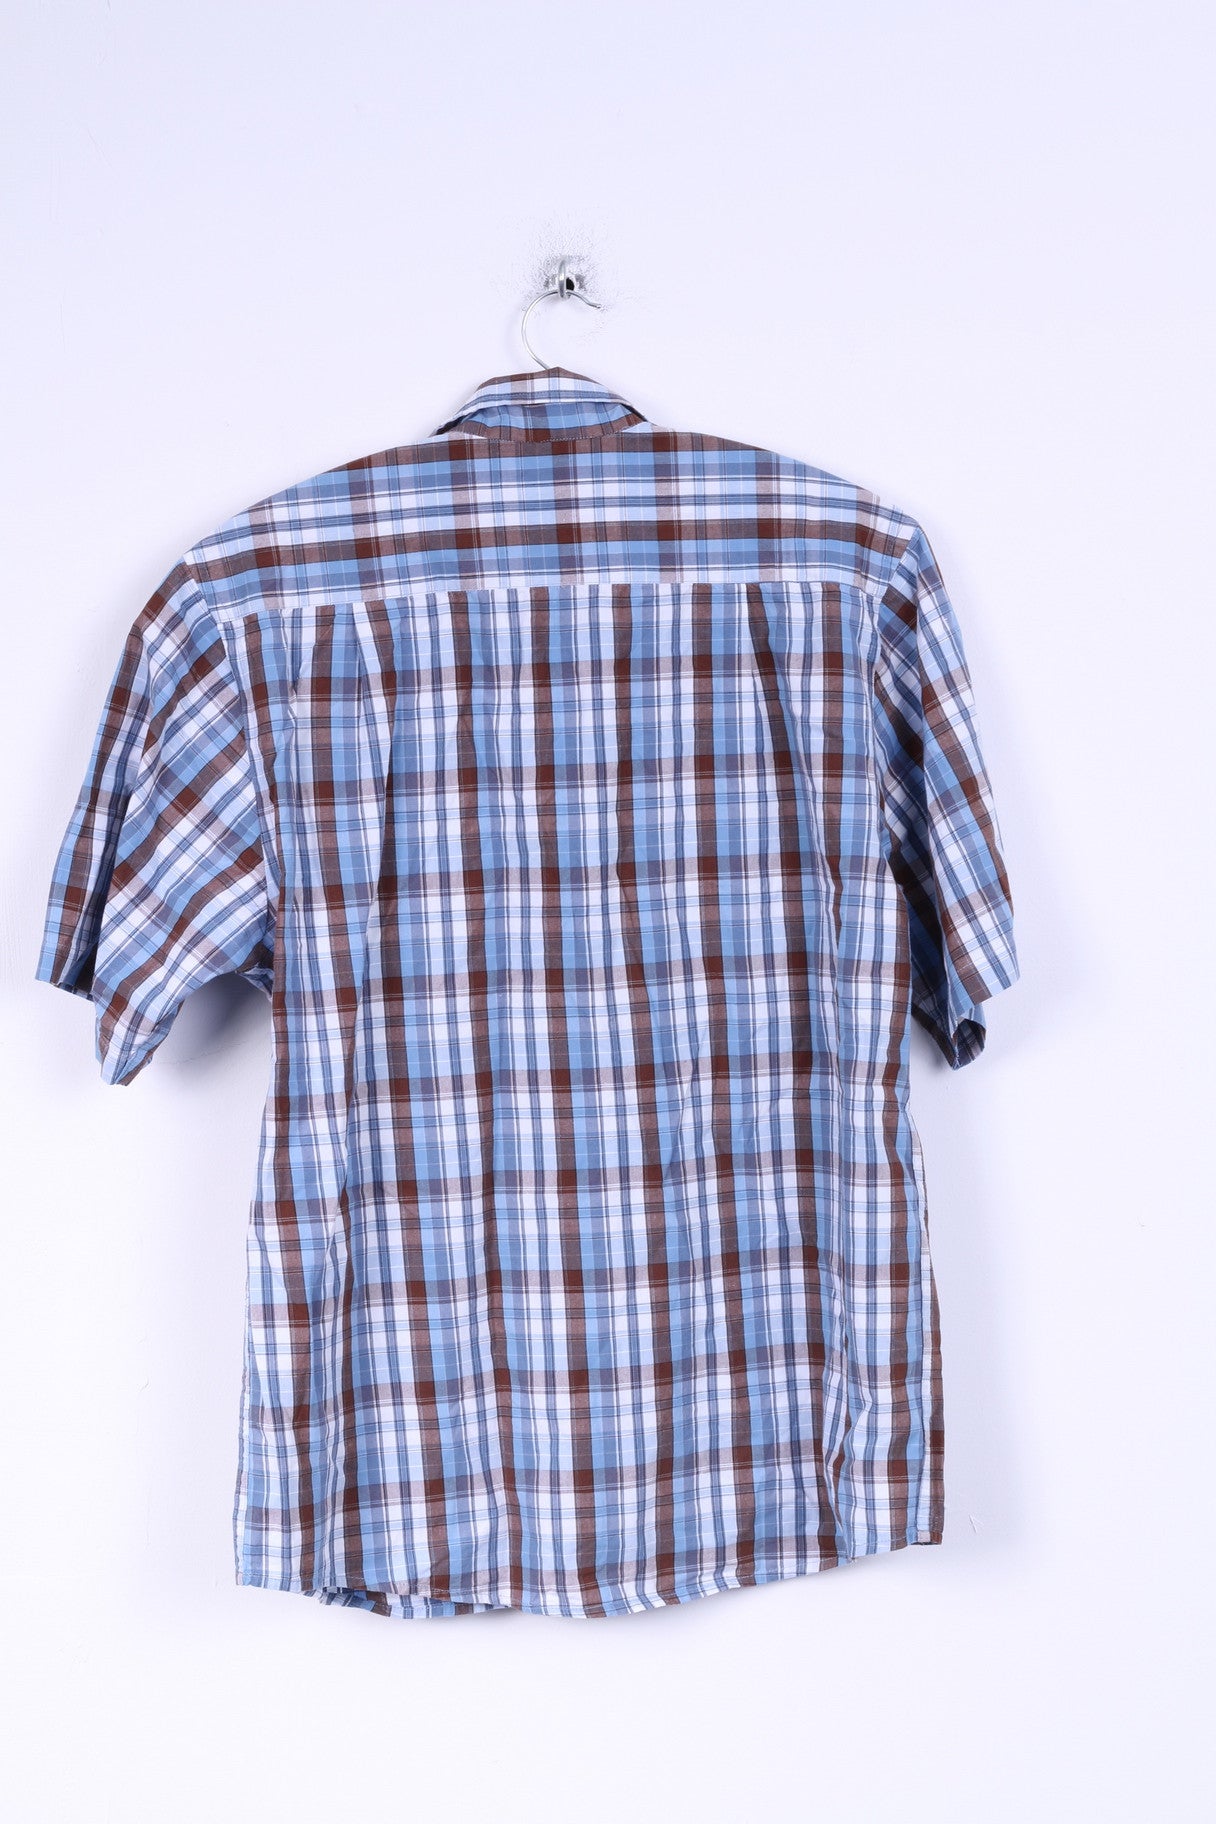 James Pringle Mens M Casual Shirt Short Sleeve Check Blue Cotton ...